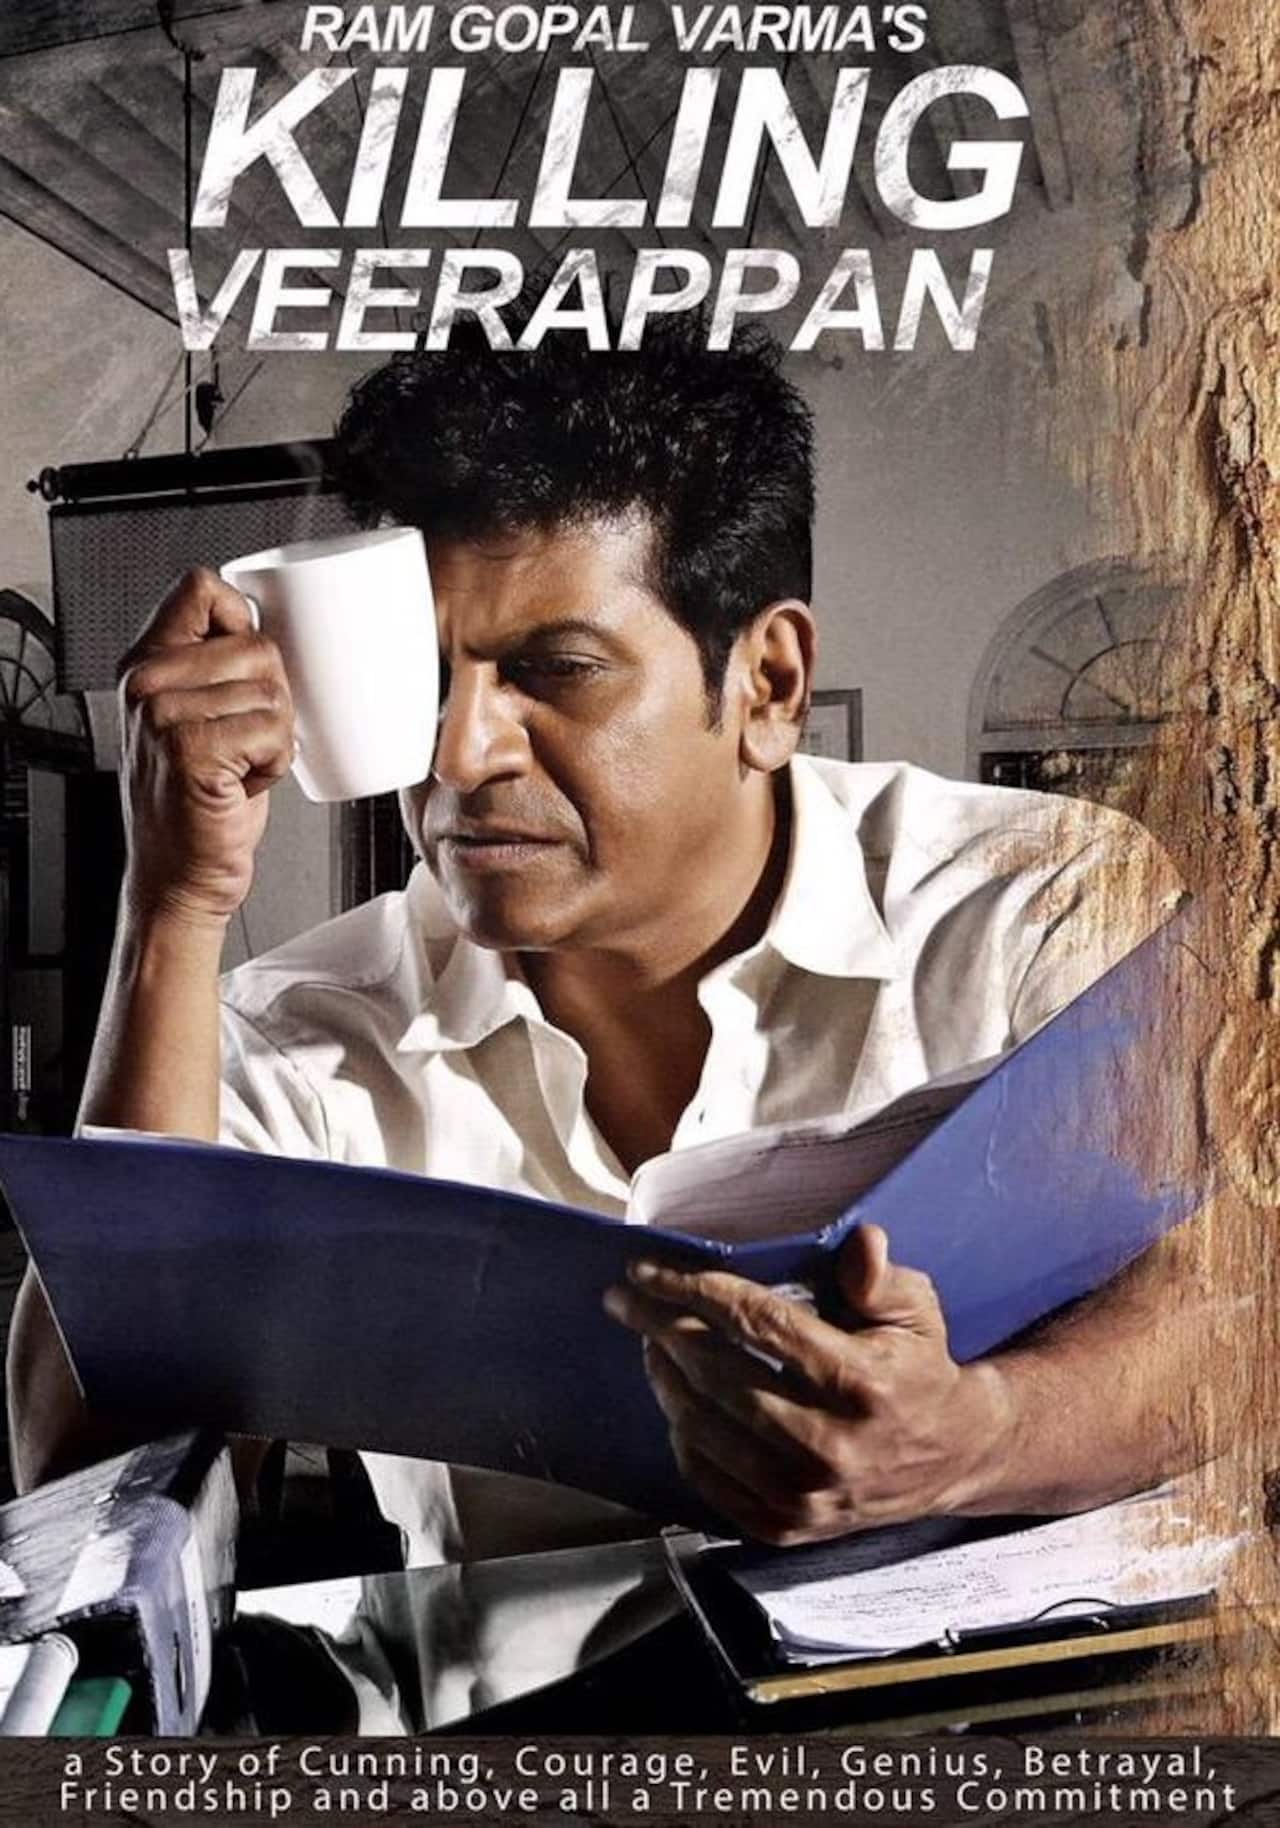 Ram Gopal Varma Shivrajkumar S Kannada Film Killing Veerappan Launched On Rajkumar S Birthday